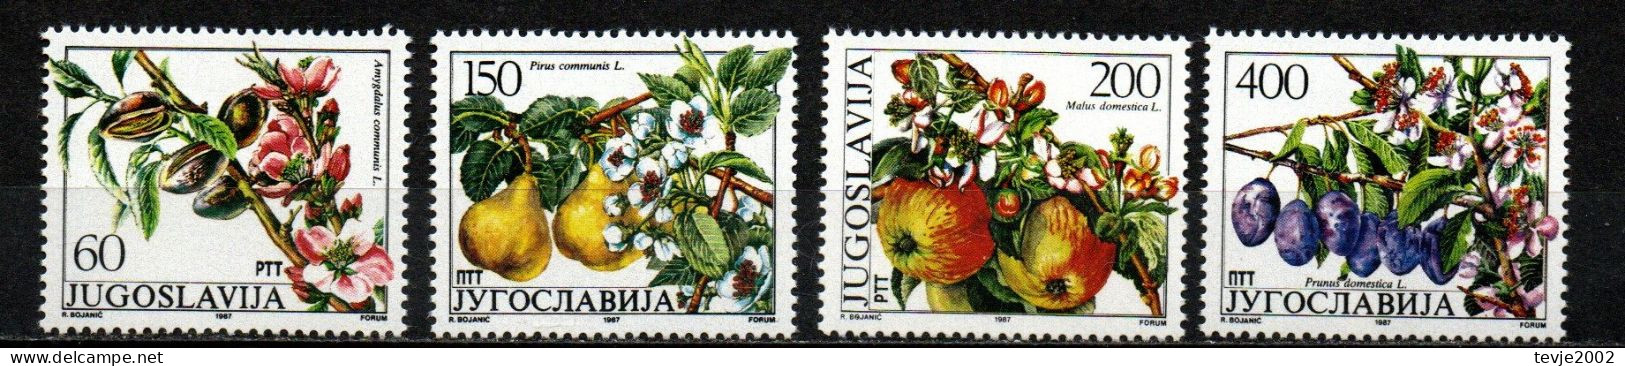 Jugoslawien 1987 - Mi.Nr. 2221 - 2224 - Postfrisch MNH - Früchte Fruits Obst - Fruits